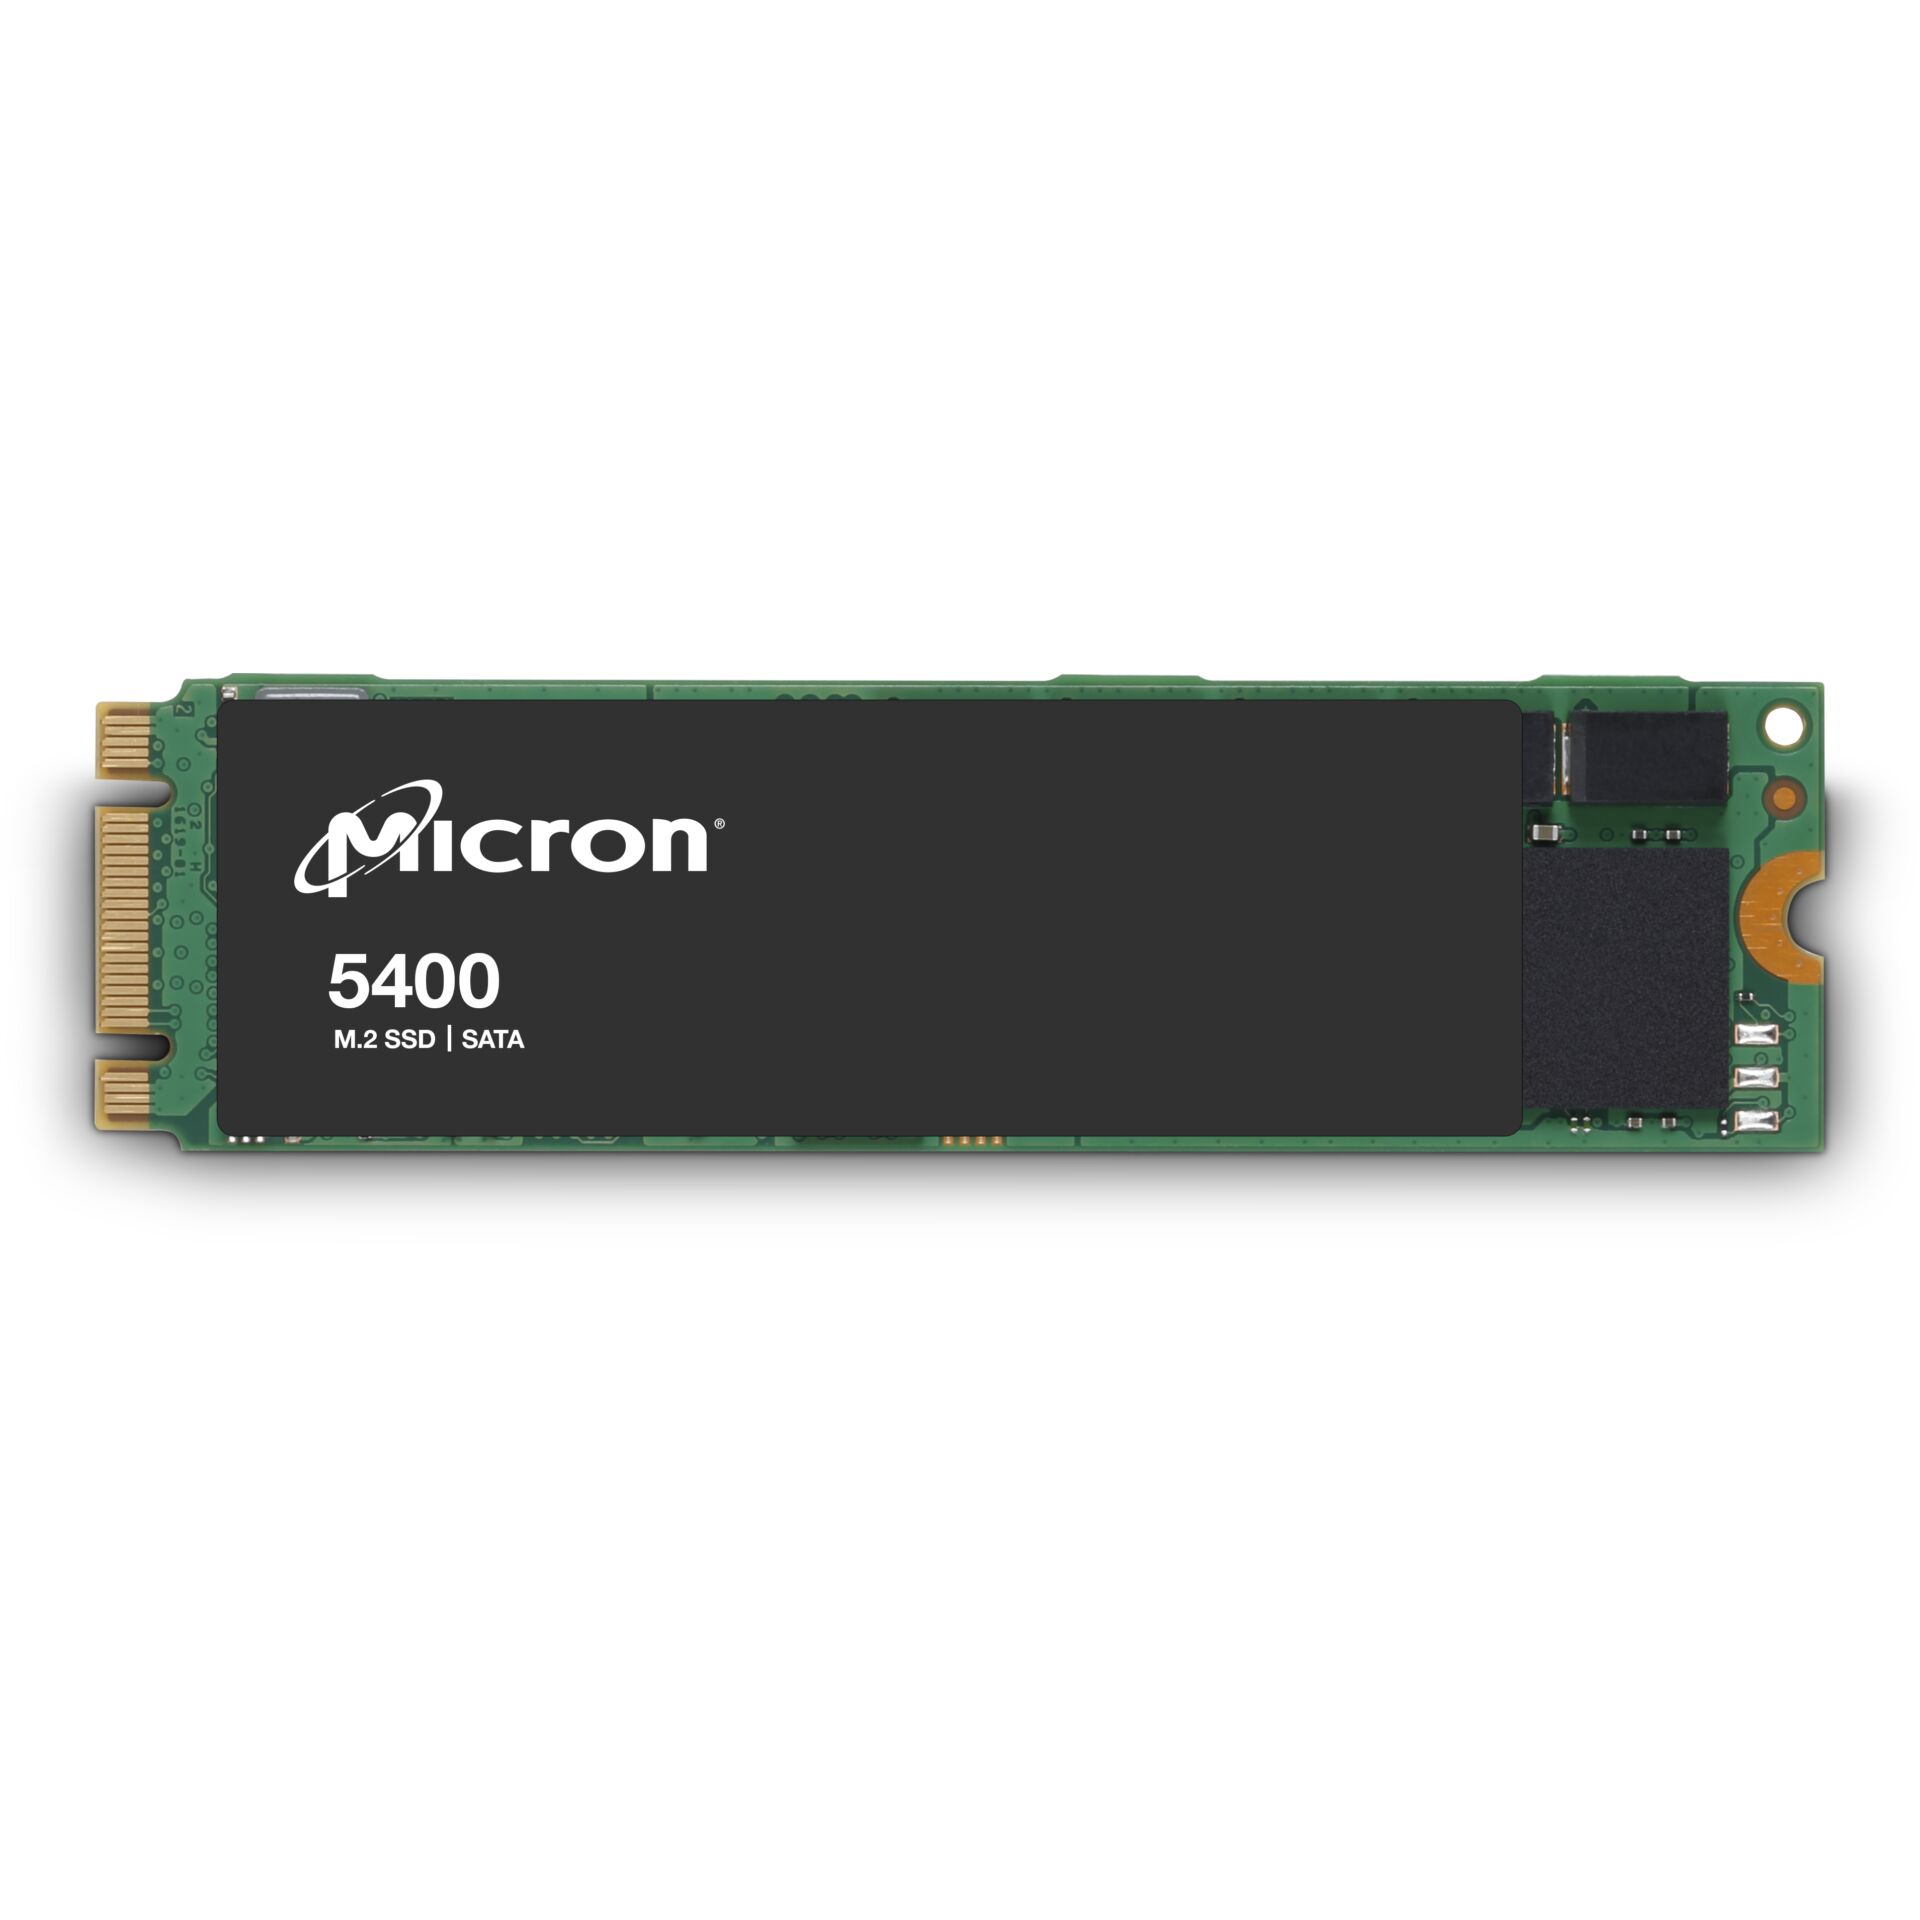 960 GB SSD Micron 5400 PRO - Read Intensive, M.2/B-M-Key (SATA 6Gb/s), lesen: 540MB/s, schreiben: 520MB/s, TBW: 2.63P